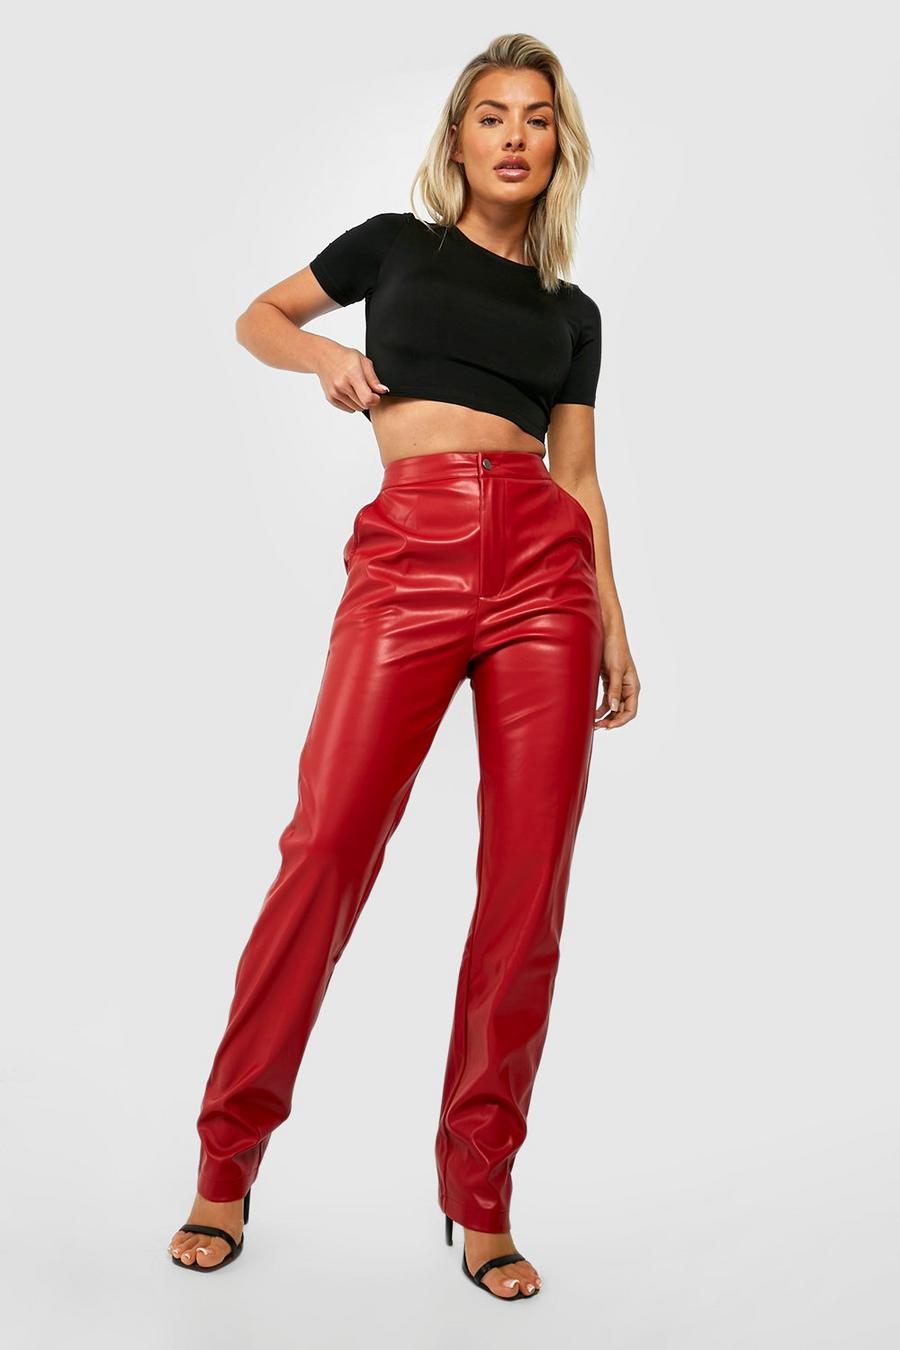 https://media.boohoo.com/i/boohoo/gzz44294_red_xl/female-red-faux-leather-high-waisted-slim-fit-pants/?w=900&qlt=default&fmt.jp2.qlt=70&fmt=auto&sm=fit